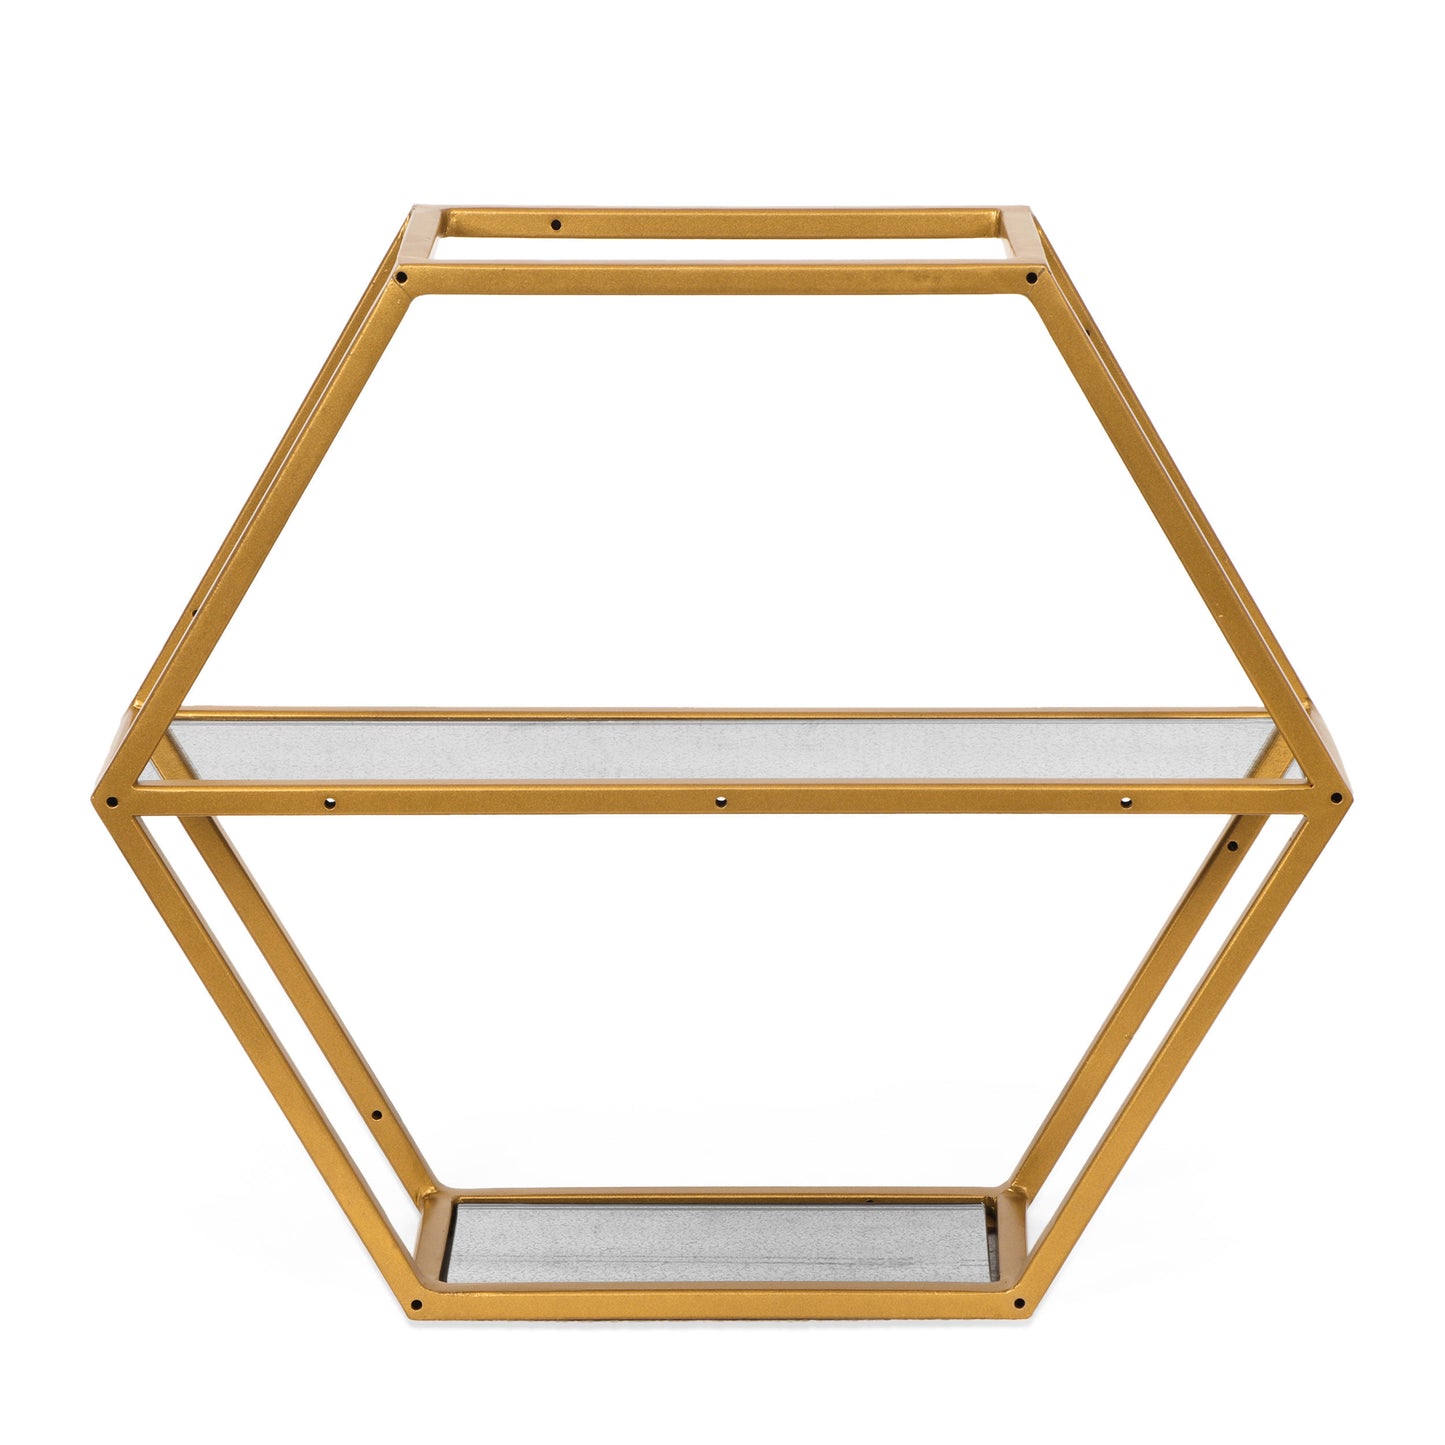 Mohaven Modern Glam Handcrafted Glass 2 Shelf Hexagonal Decorative Shelf, Antique Gold